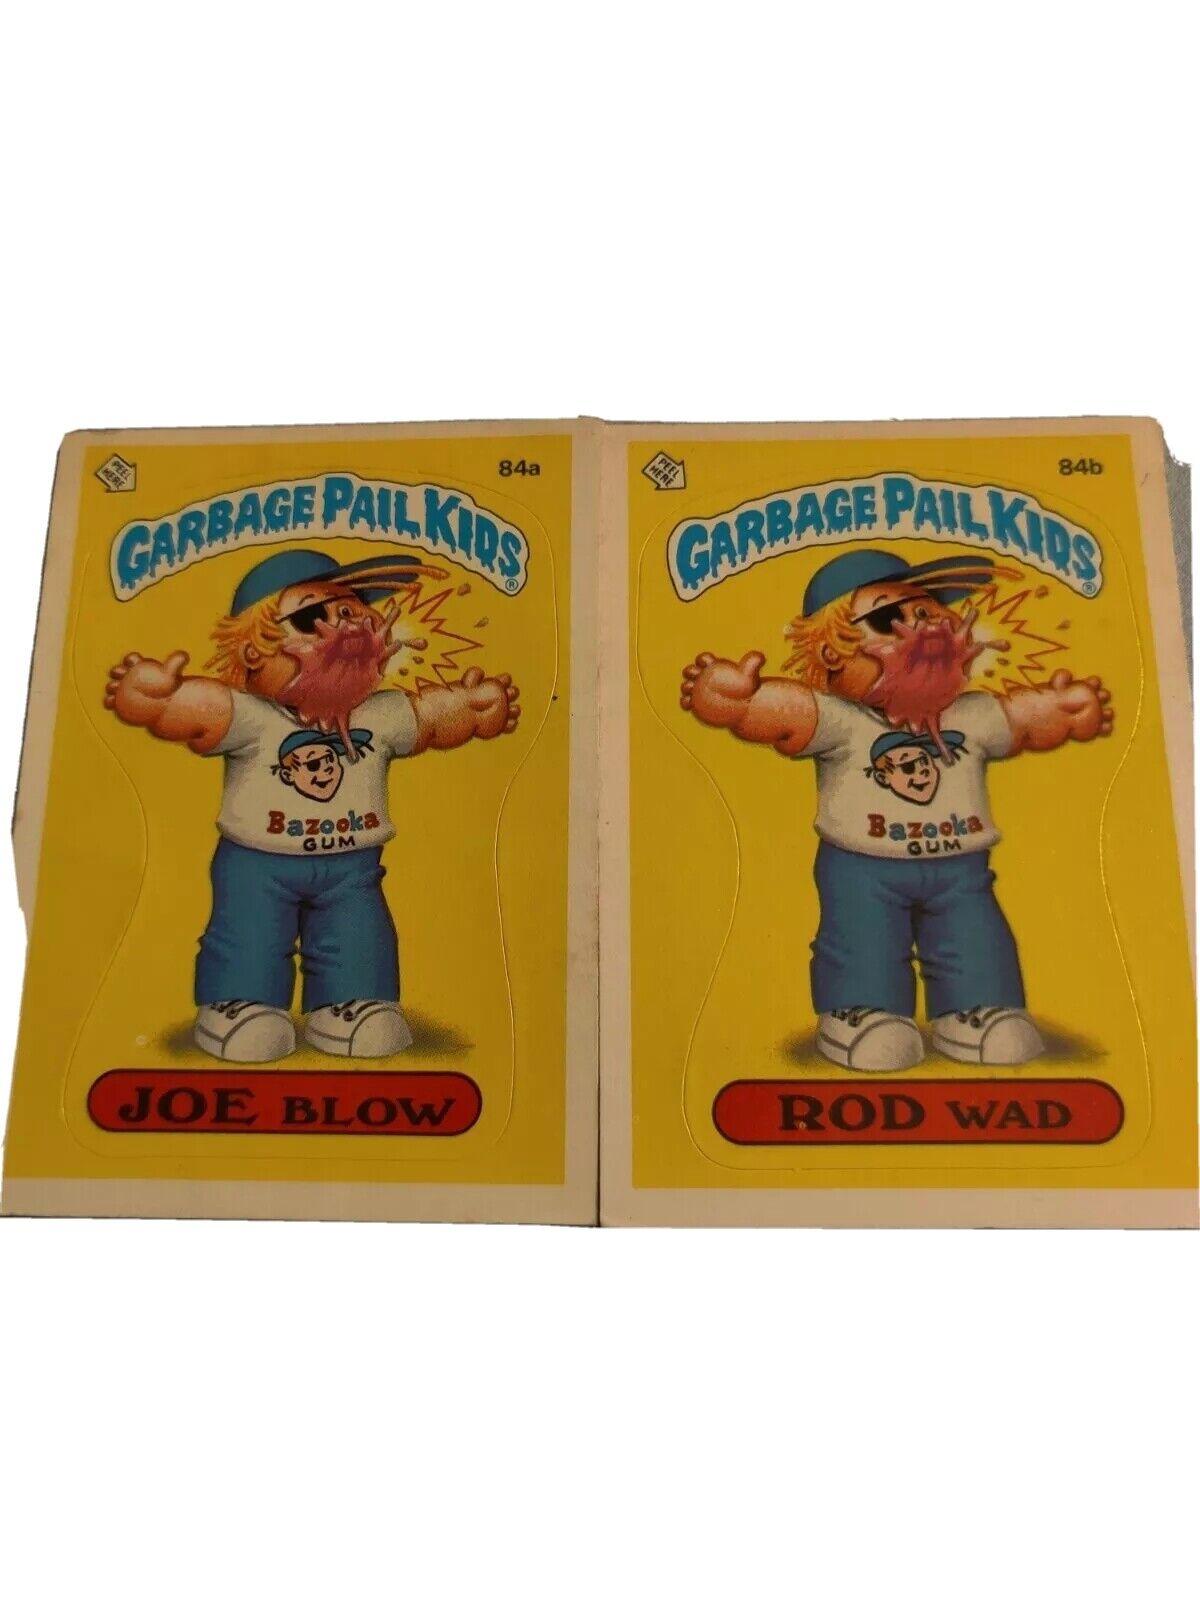 Garbage Pail Kids GPK set cards Joe Blow 84a Rod Wad 84b 1986 Topps